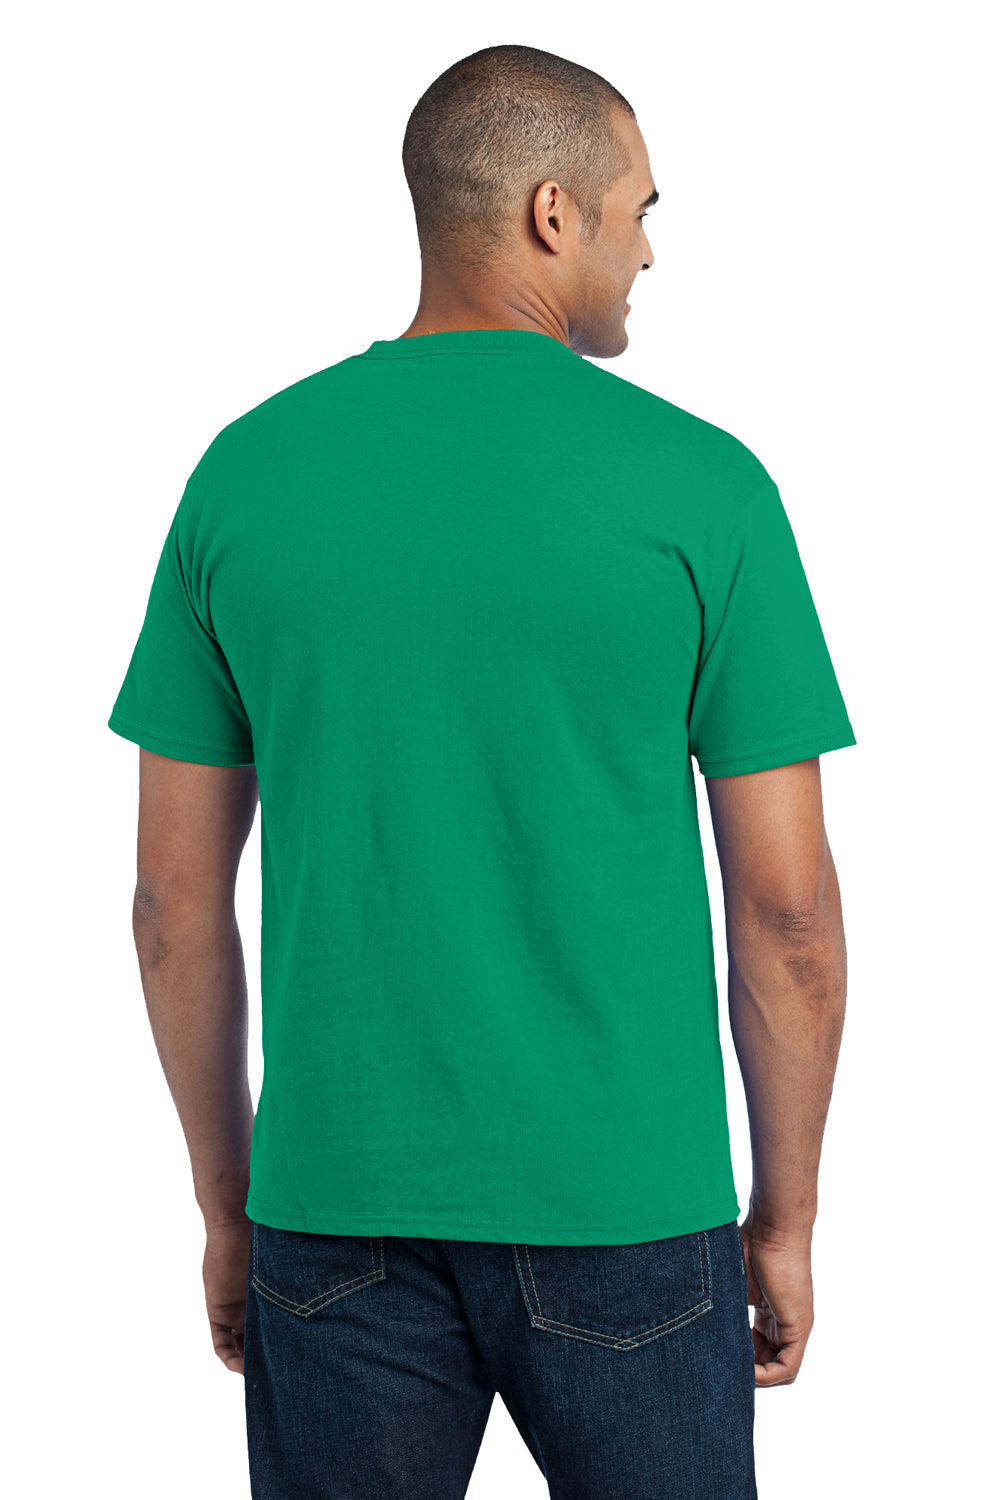 Port & Company PC55P Mens Core Short Sleeve Crewneck T-Shirt w/ Pocket Kelly Green Back